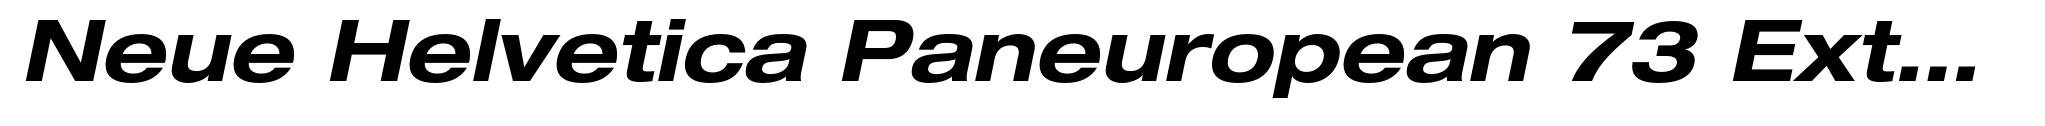 Neue Helvetica Paneuropean 73 Extended Bold Oblique image